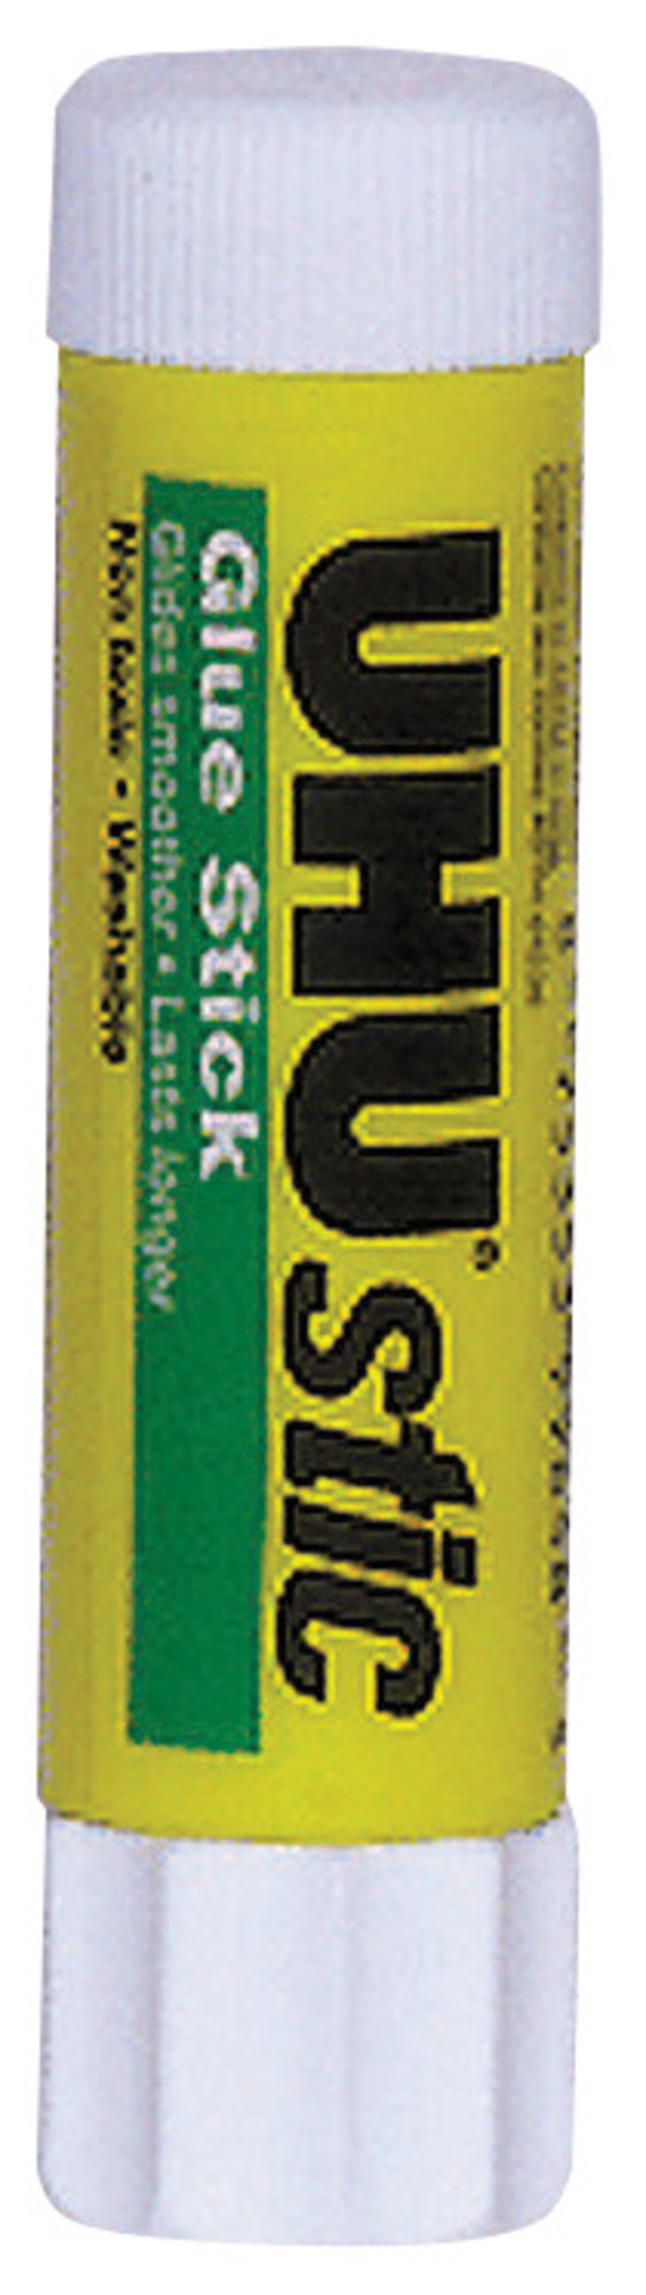 Glue Sticks, Item Number 037091